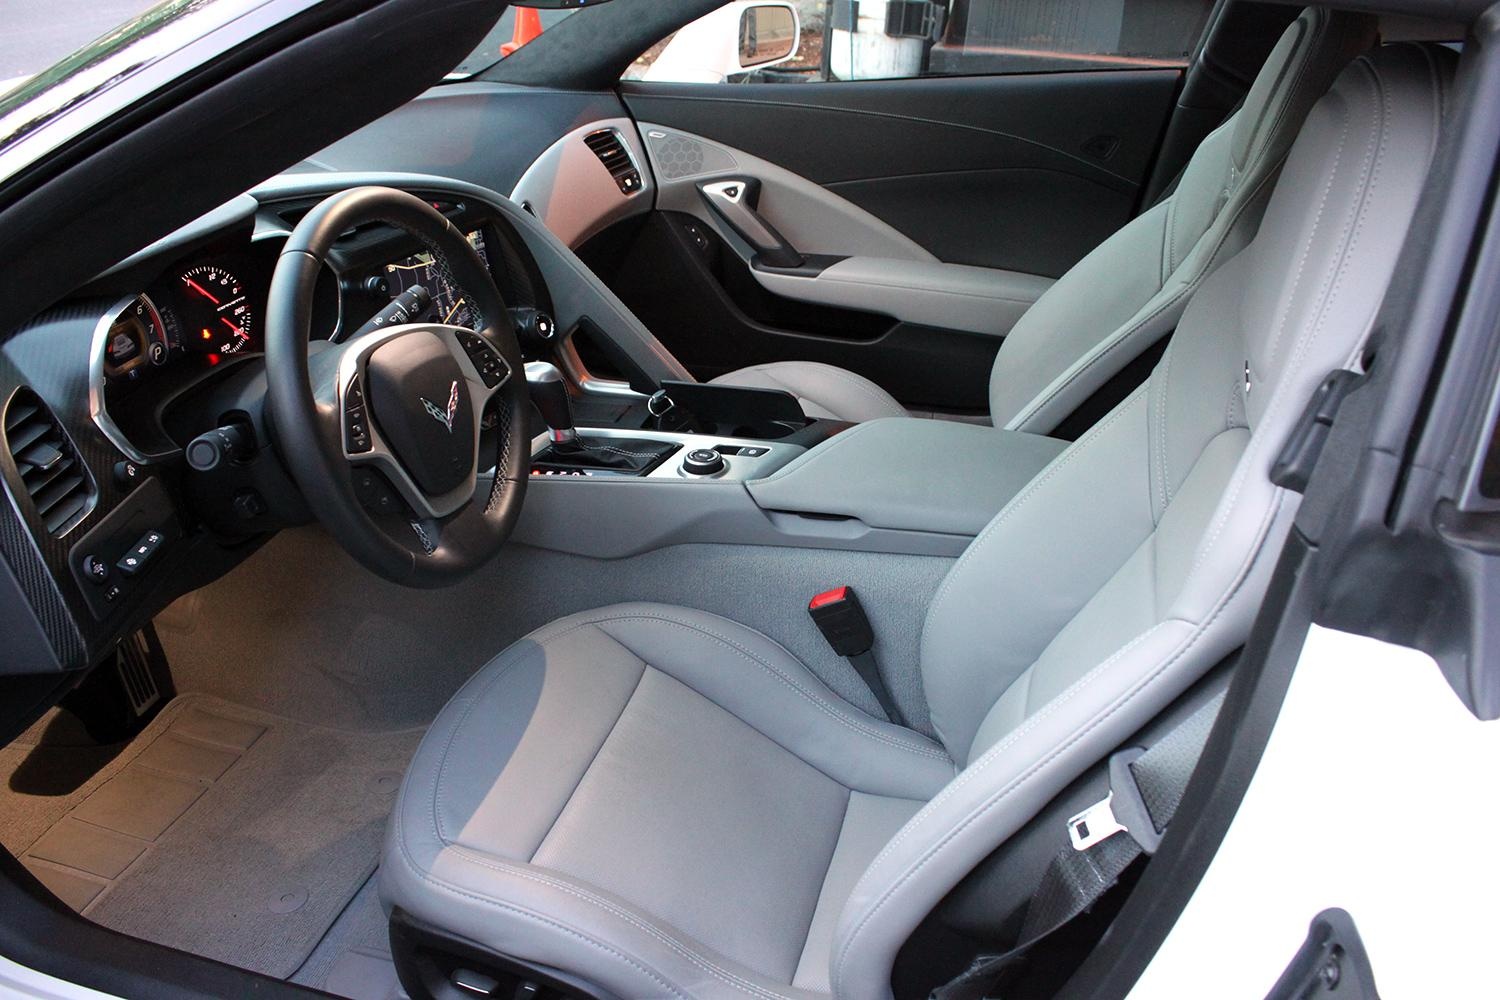 2014-corvette-stingray-interior1-1500x1000